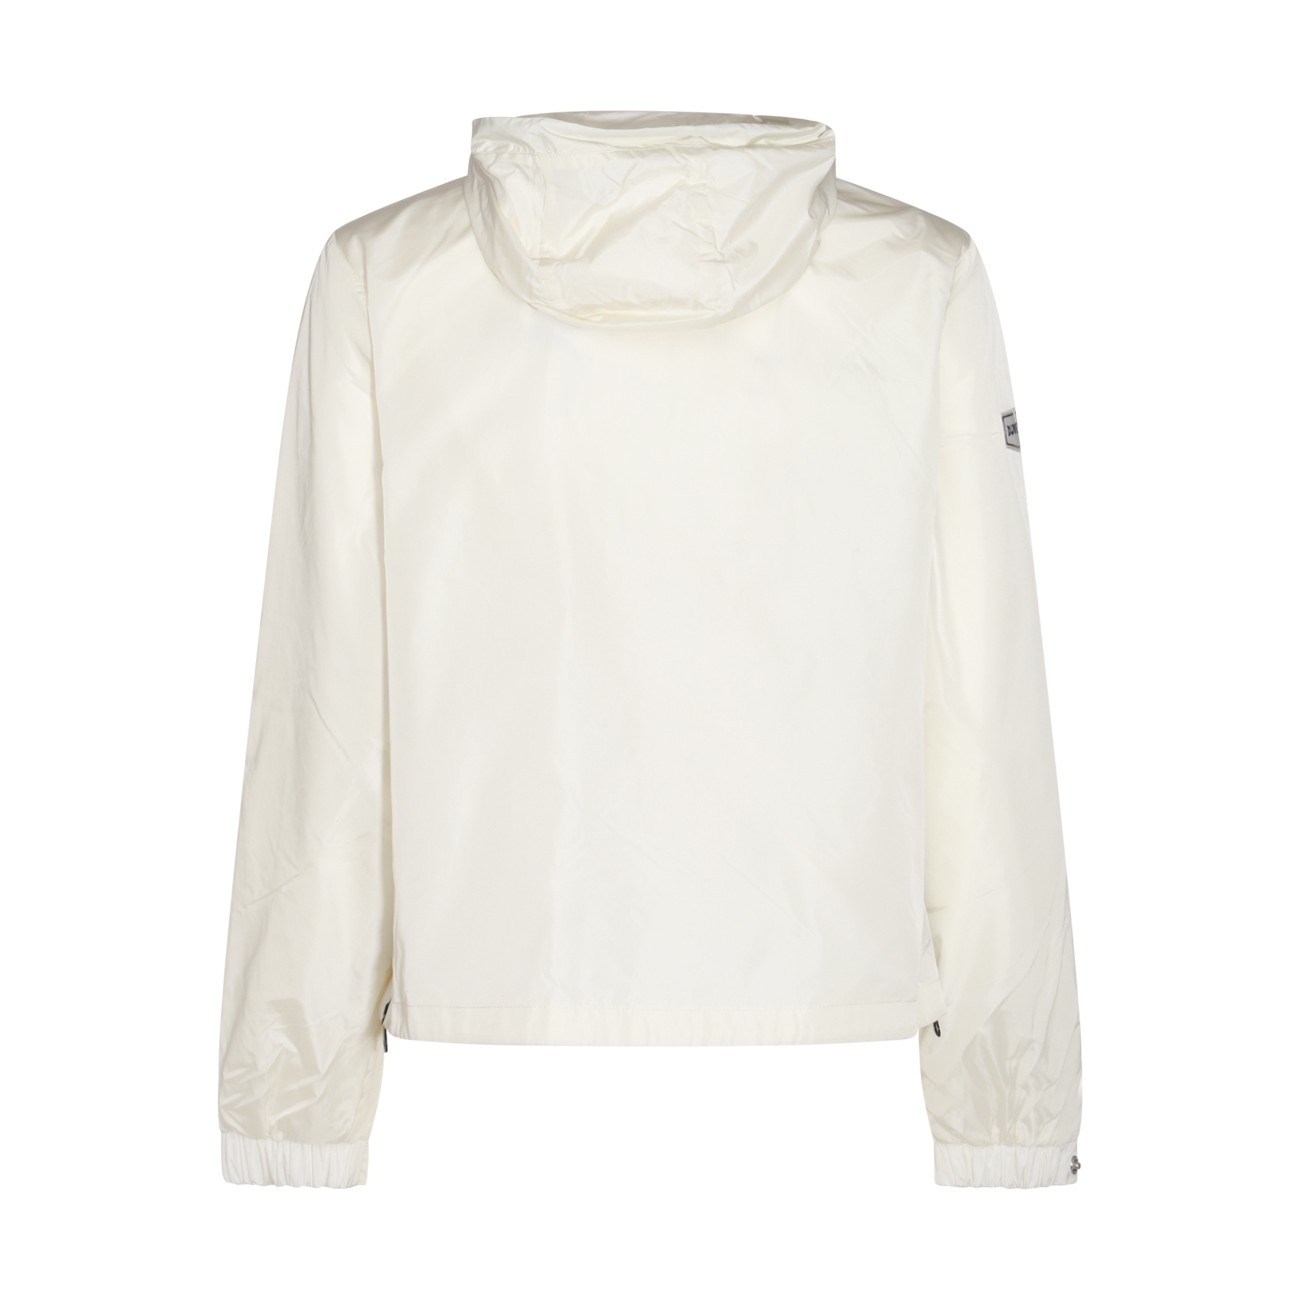 white casual jacket - 2